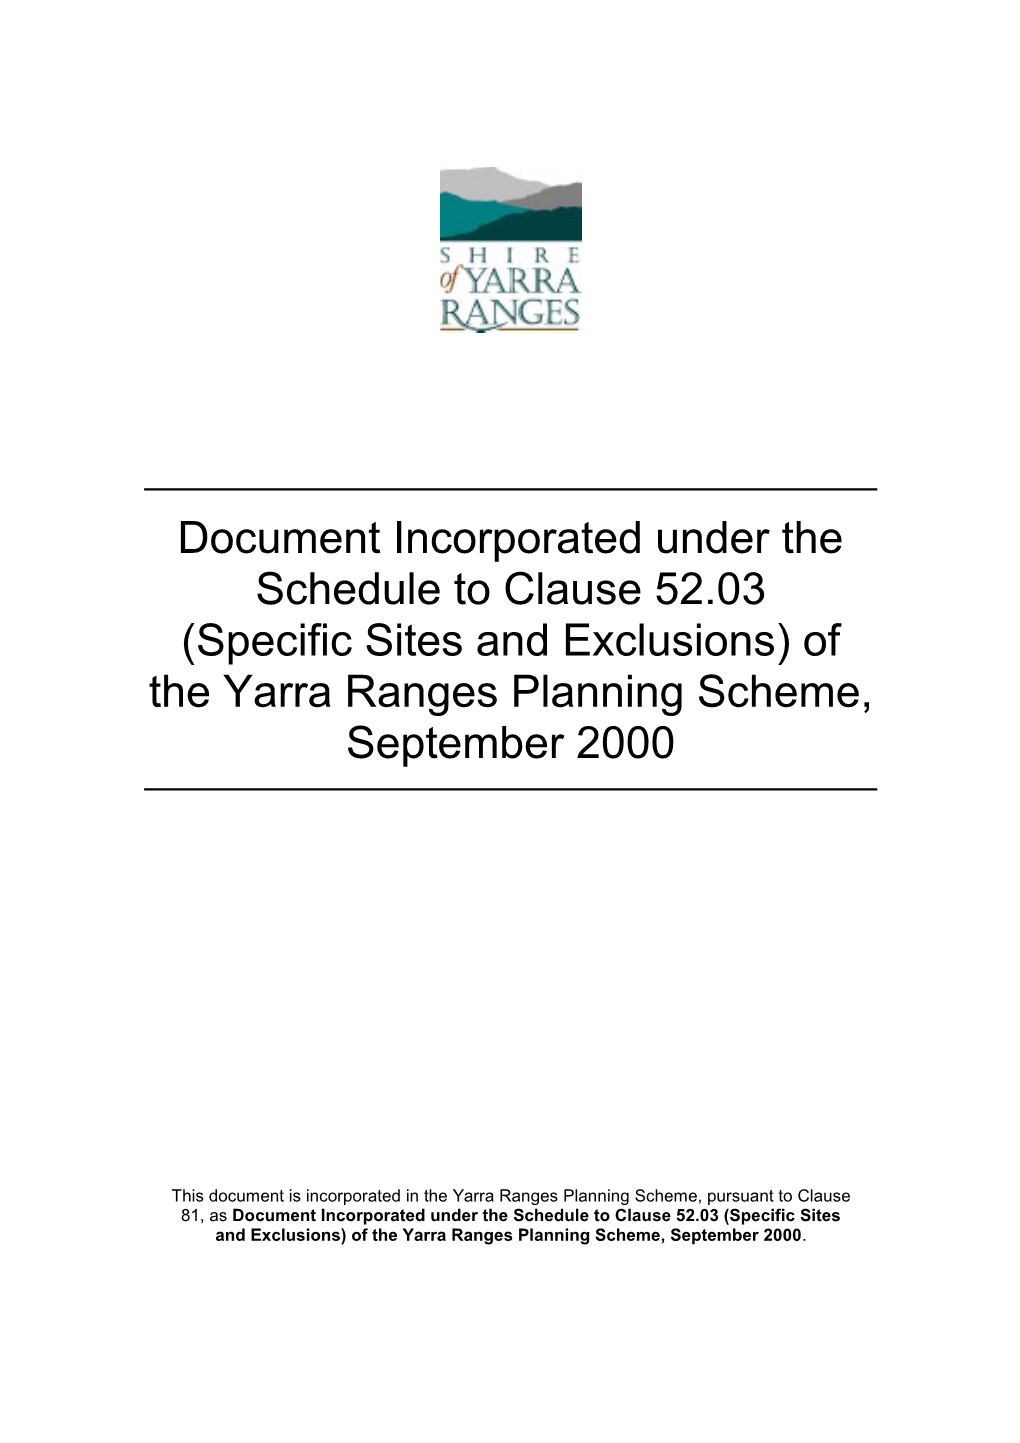 Of the Yarra Ranges Planning Scheme, September 2000